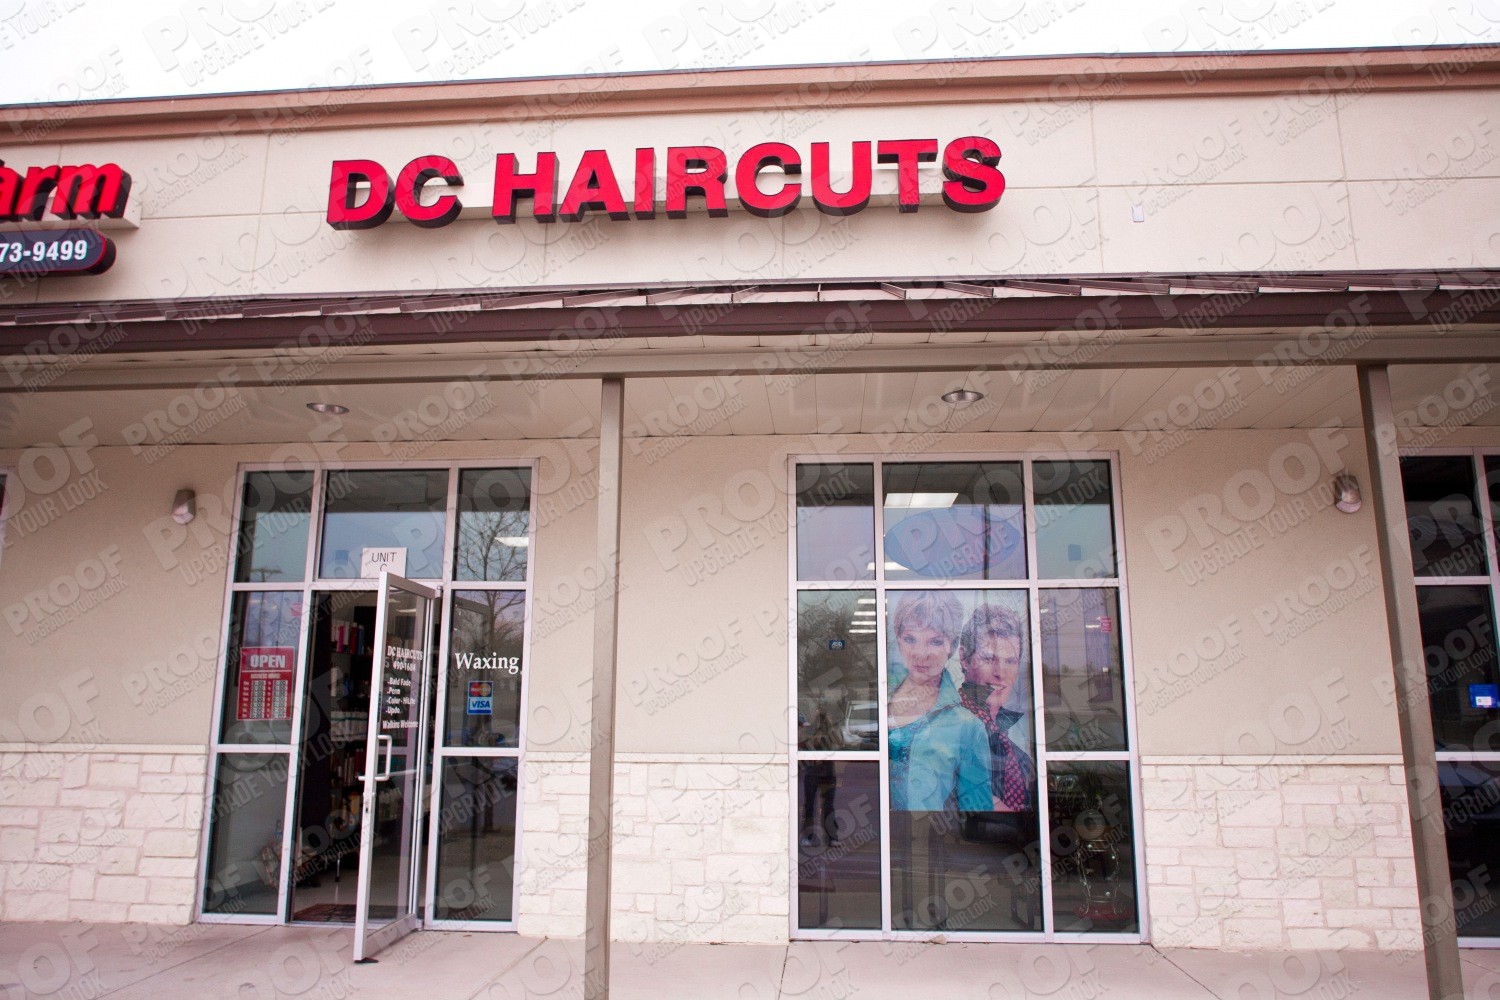 DC Haircuts